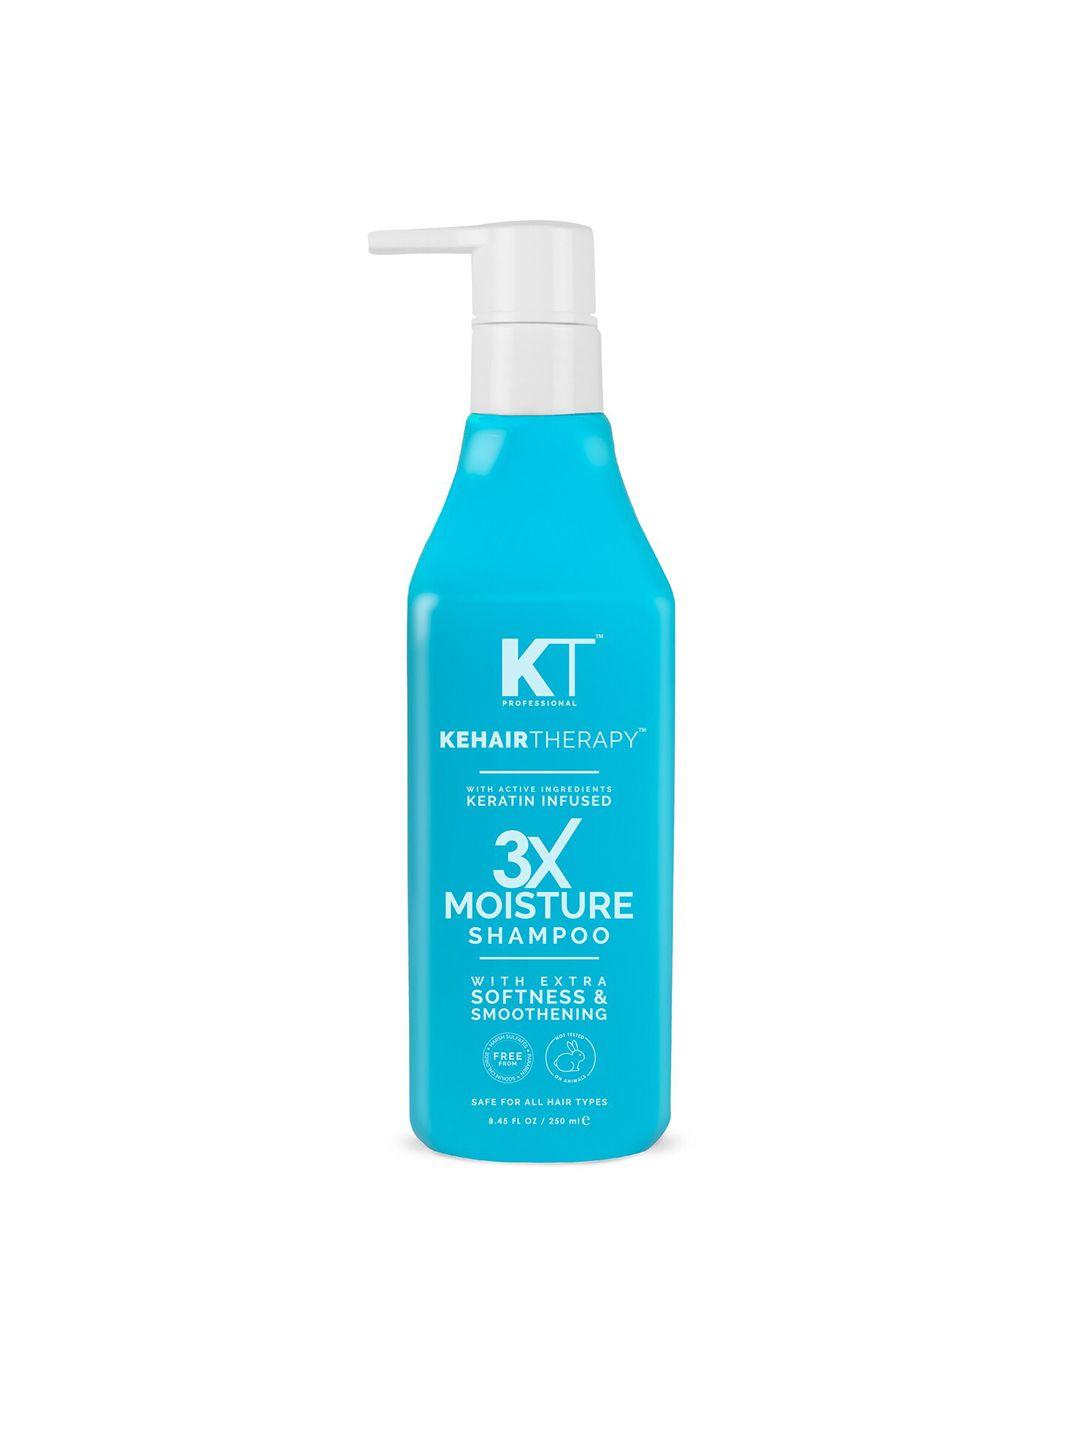 kehairtherapy kt professional kehairtherapy sulfate free 3x moisture shampoo 250 ml